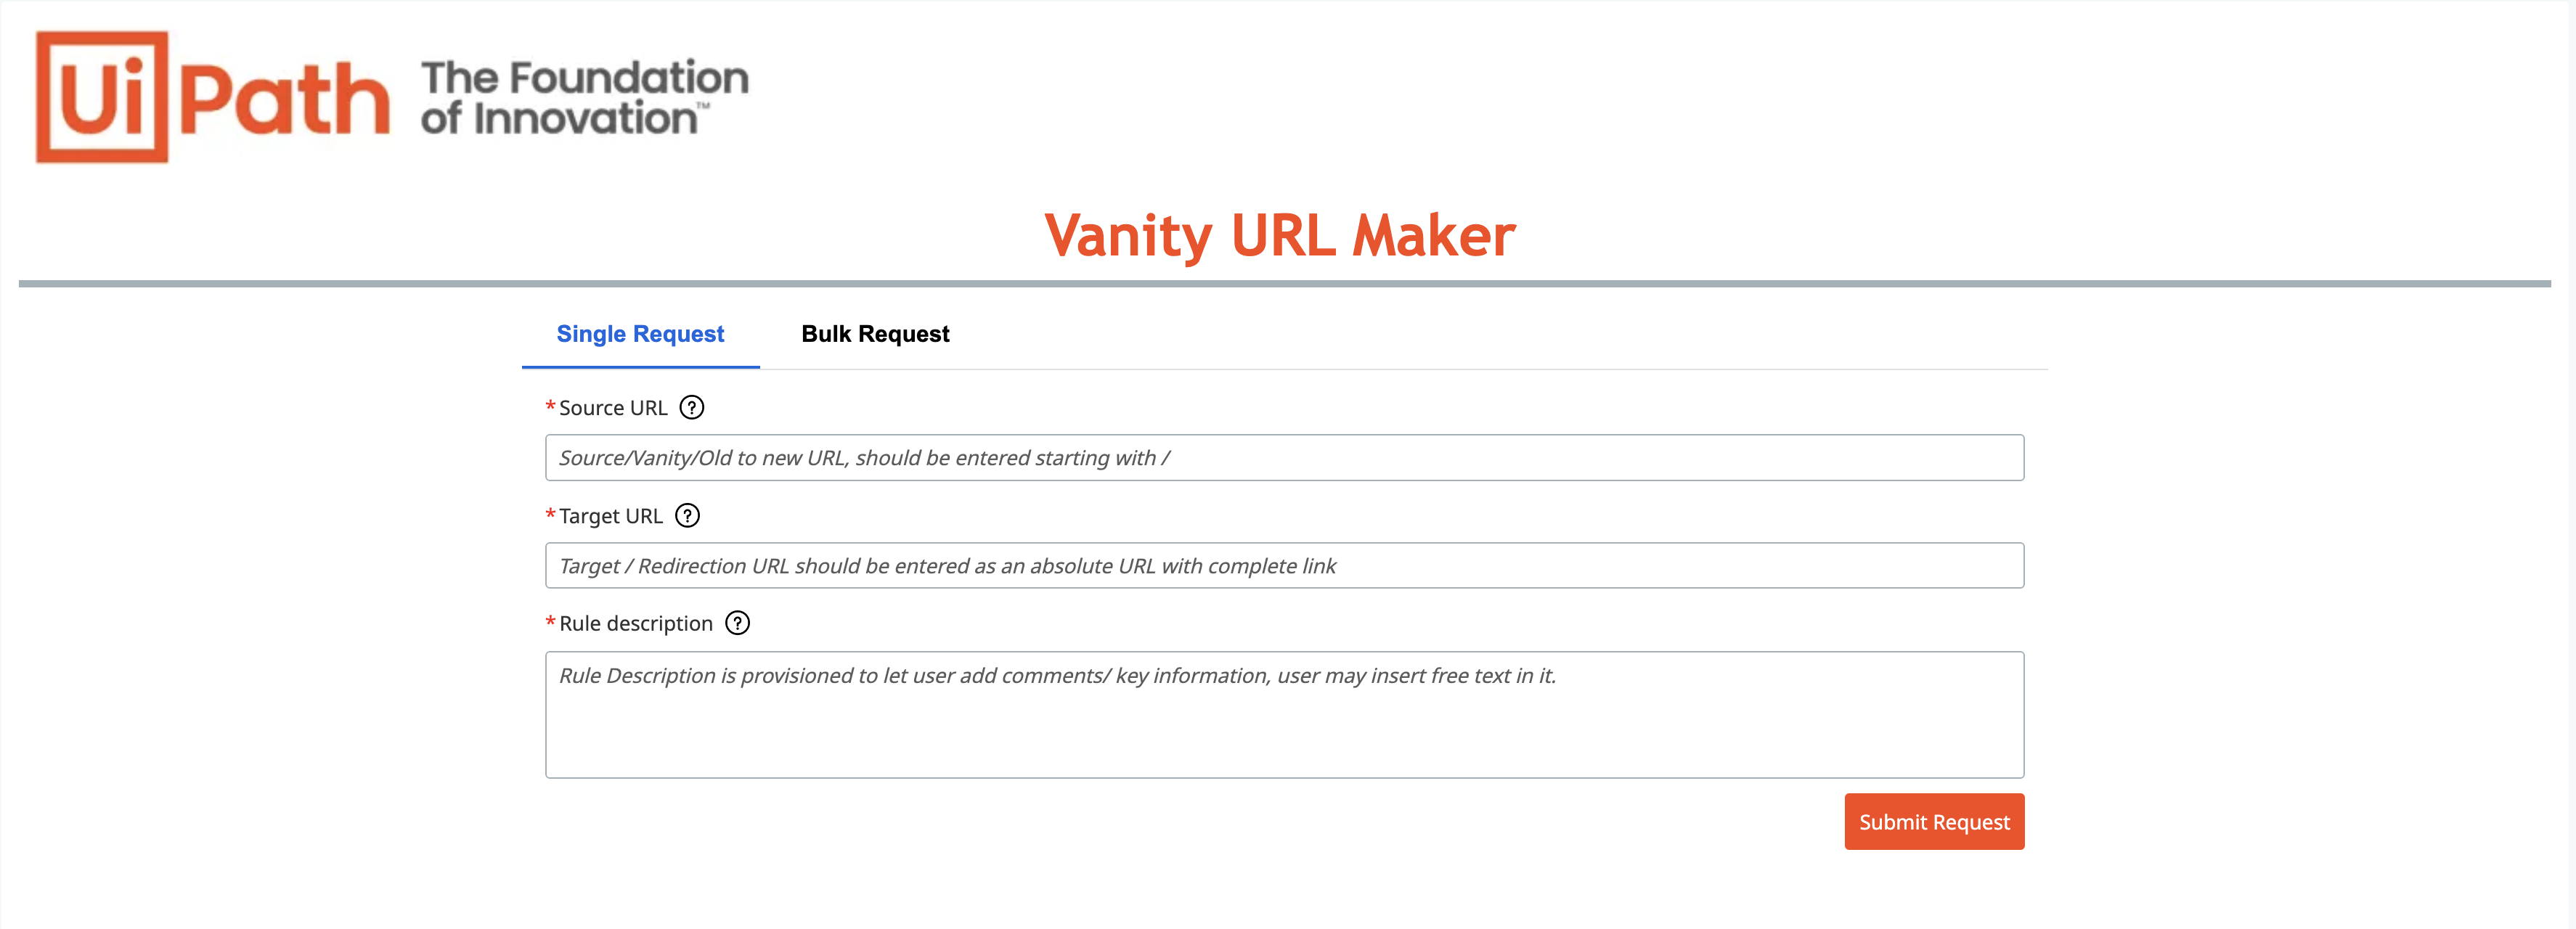 UiPath CoE Vanity URL maker automation